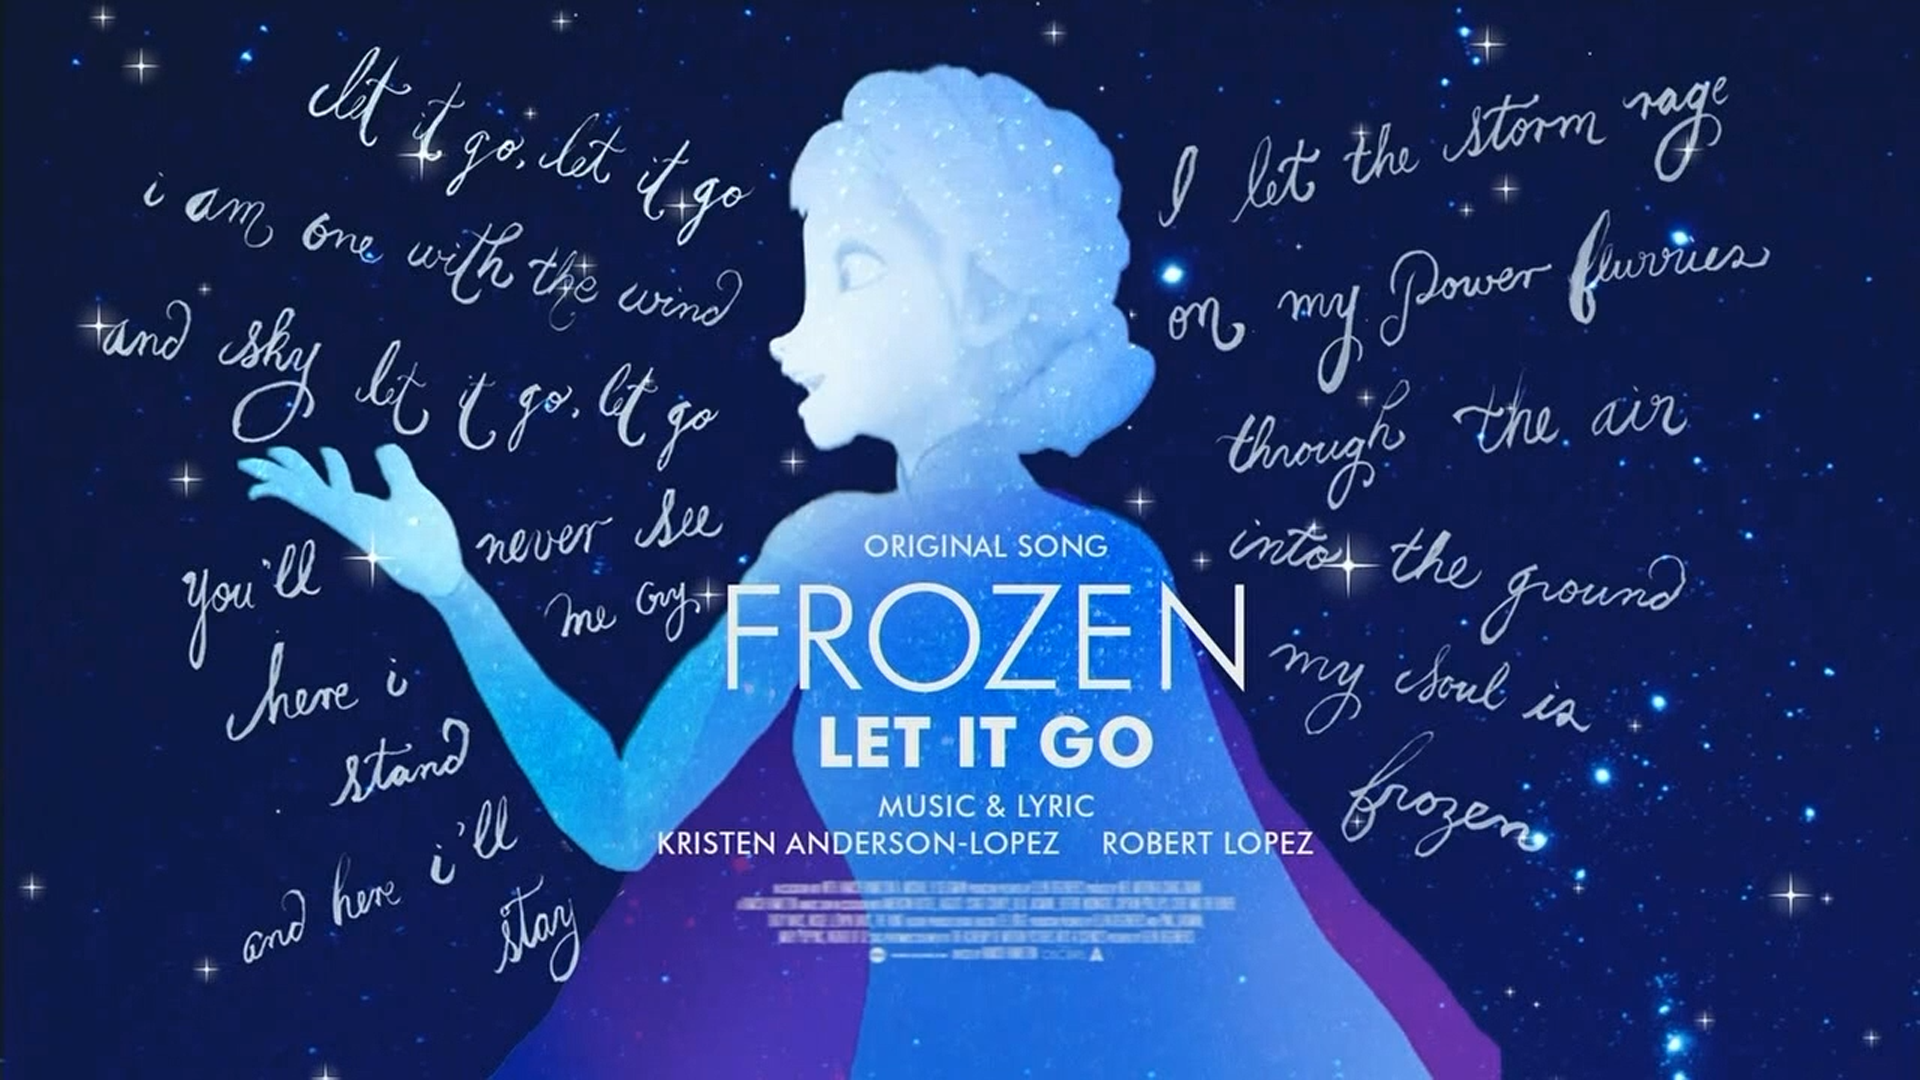 Oscar graphic for original song, Let It Go